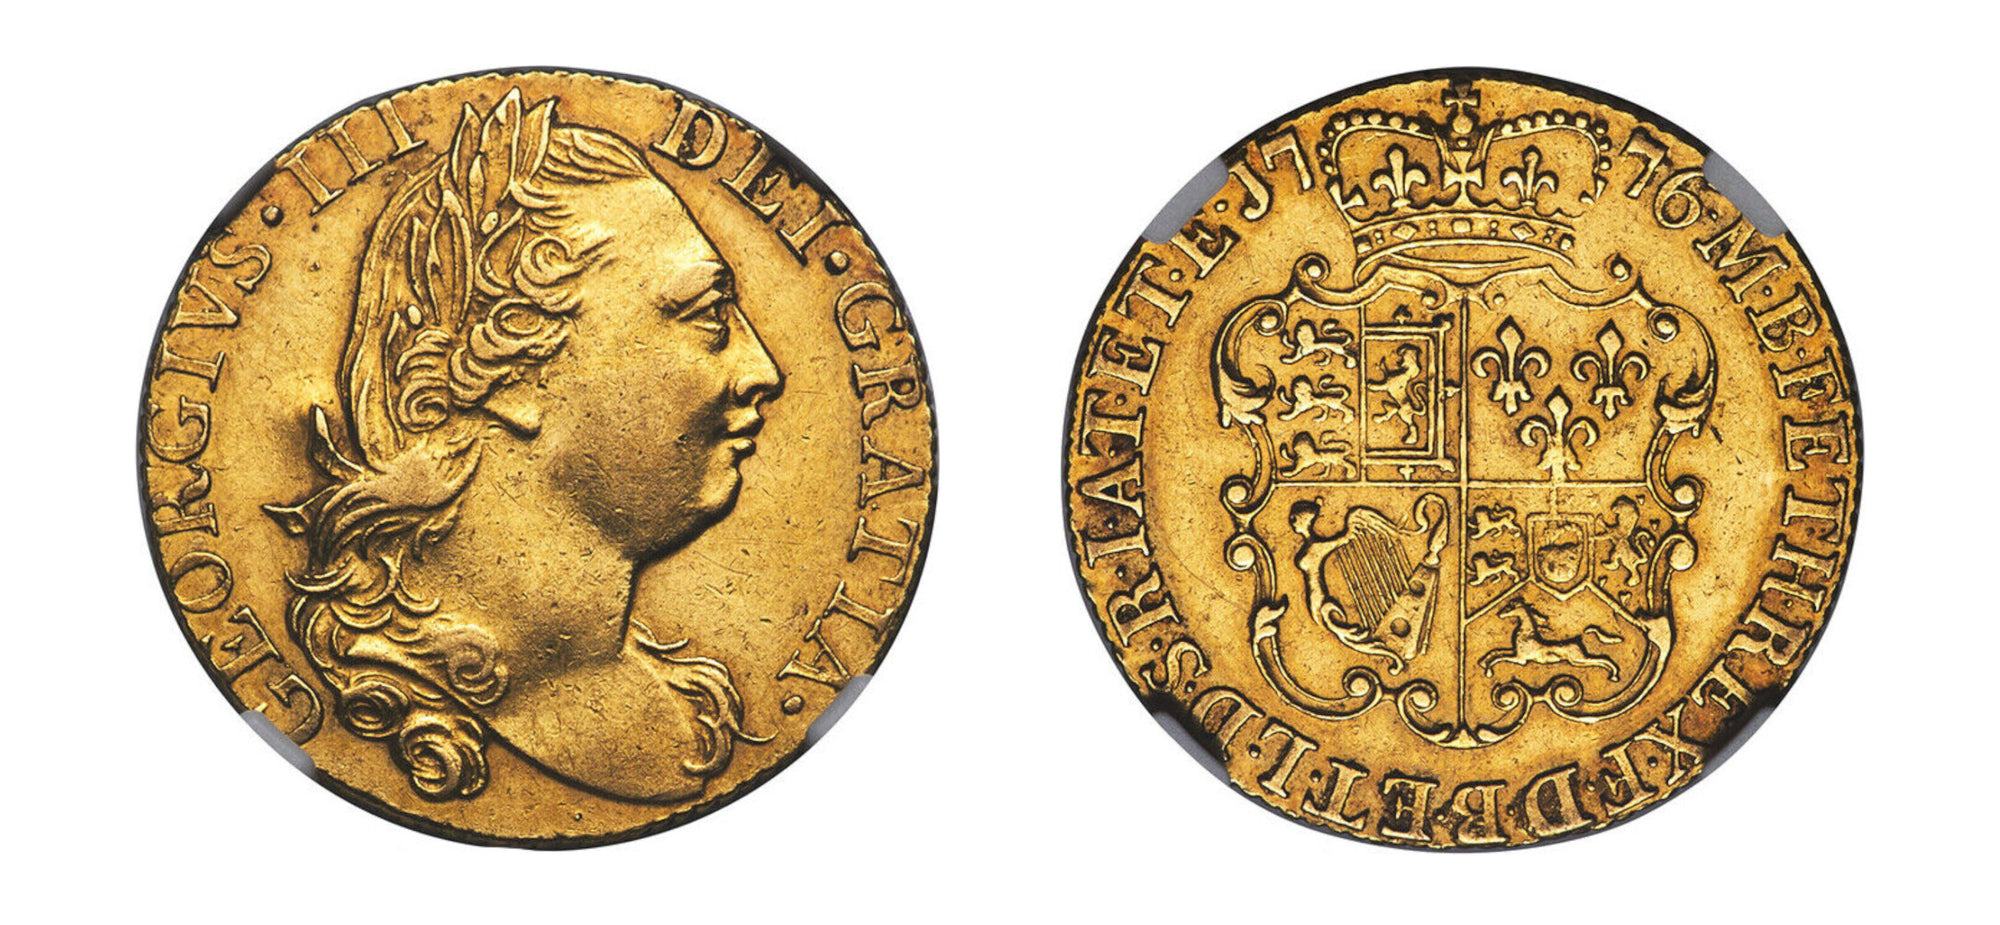 1776 Gold Guinea King George III NGC AU53 - Hard Asset Management, Inc